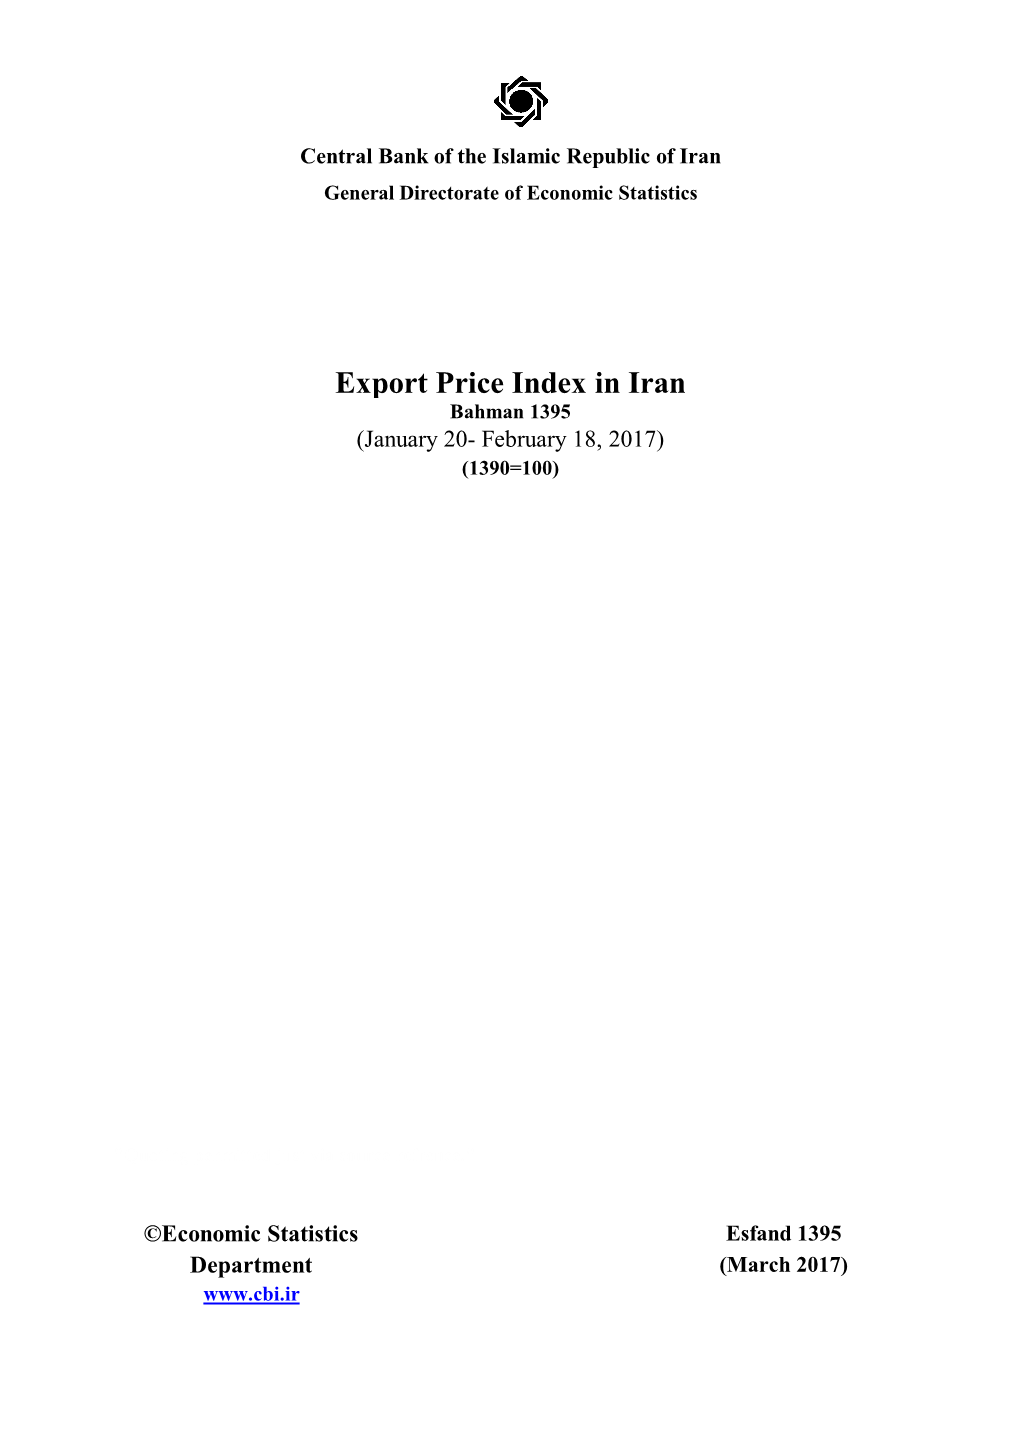 Export Price Index in Iran Bahman 1395 (January 20- February 18, 2017) (1390=100)